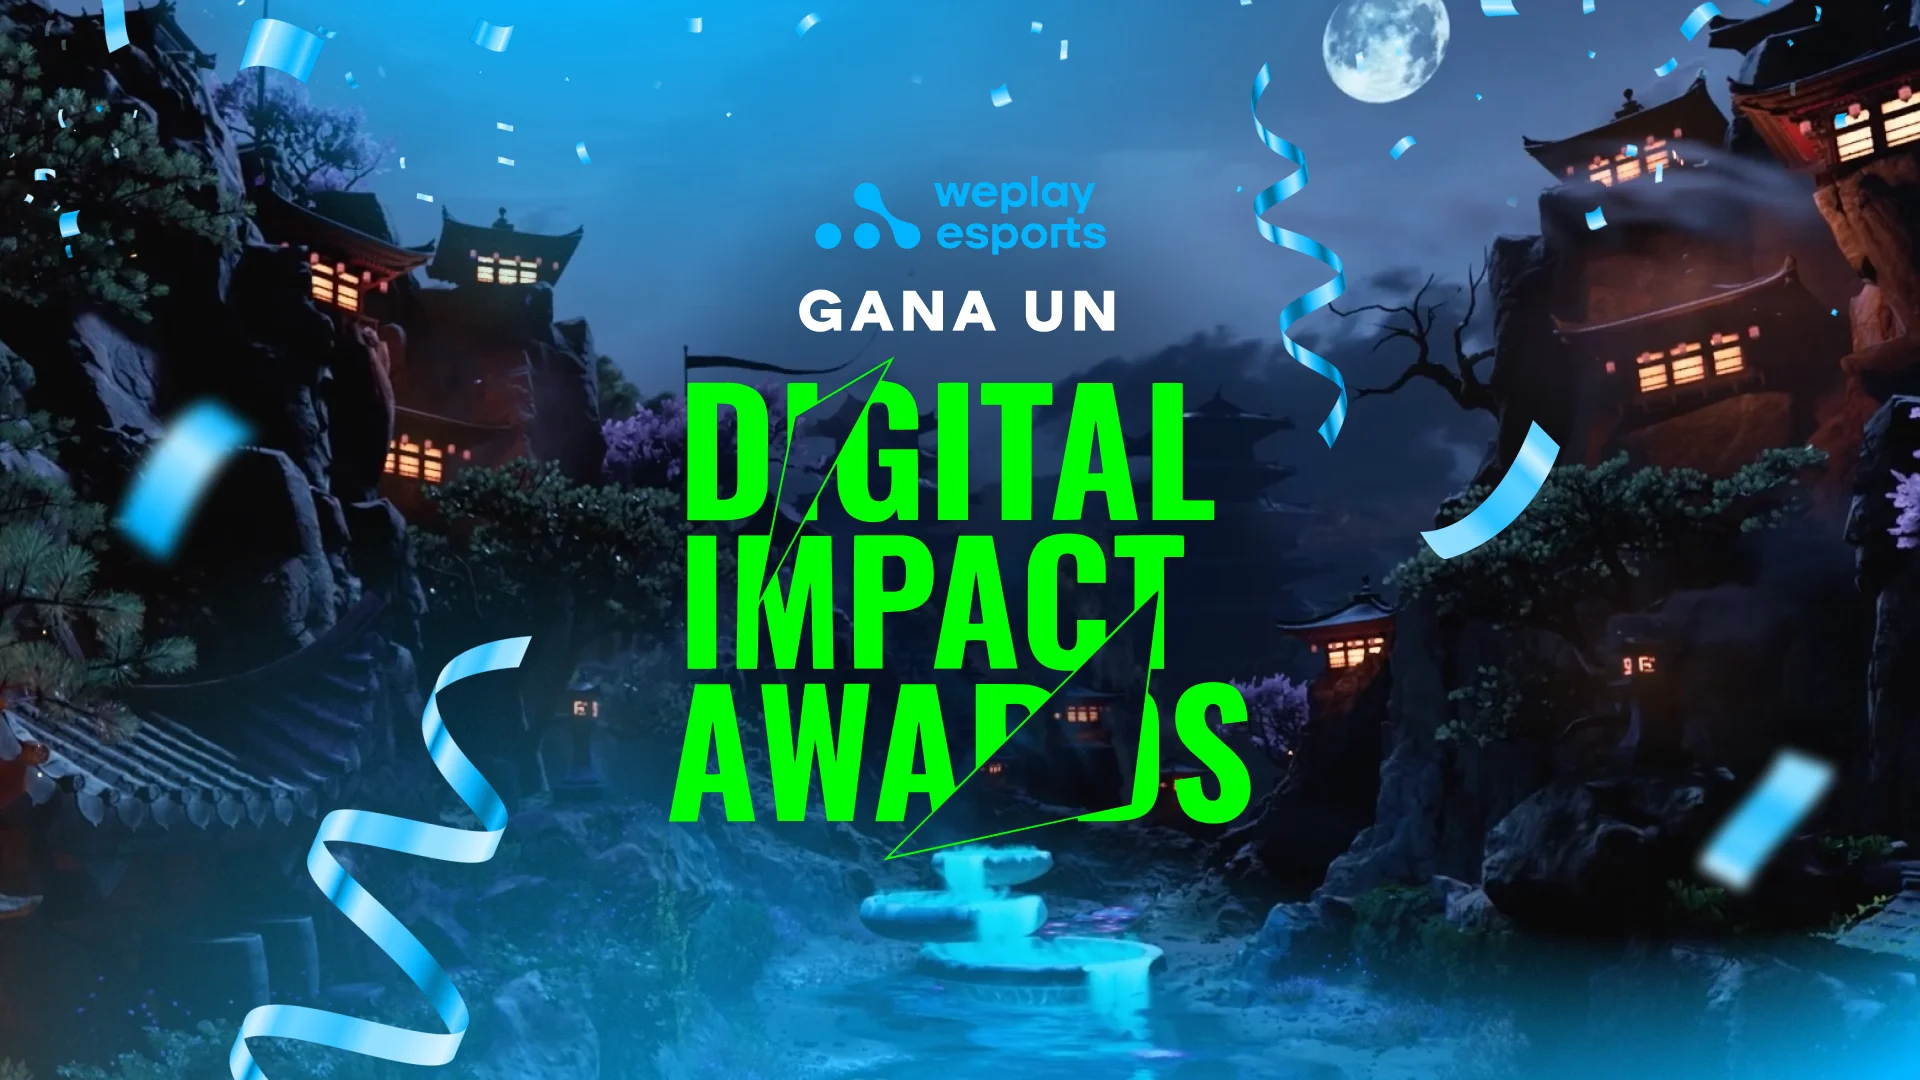 WePlay Esports gana el bronce en los Digital Impact Awards. Imagen: WePlay Holding